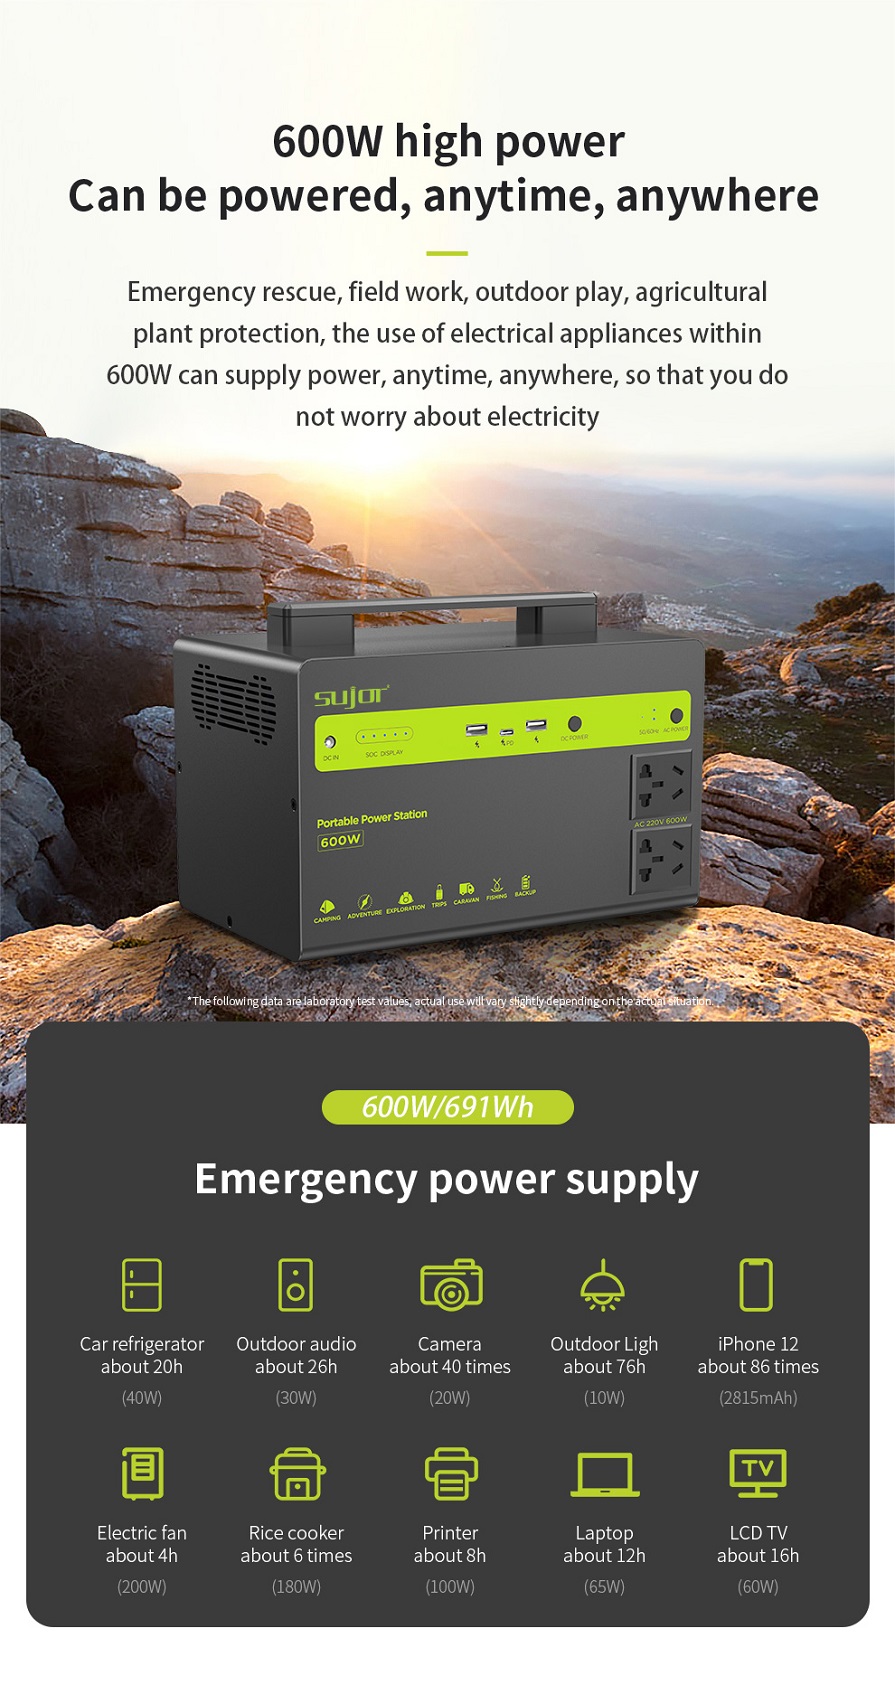 SUJOR Portable Power Station 600W BT600 Portable Power Supply Solar Generator